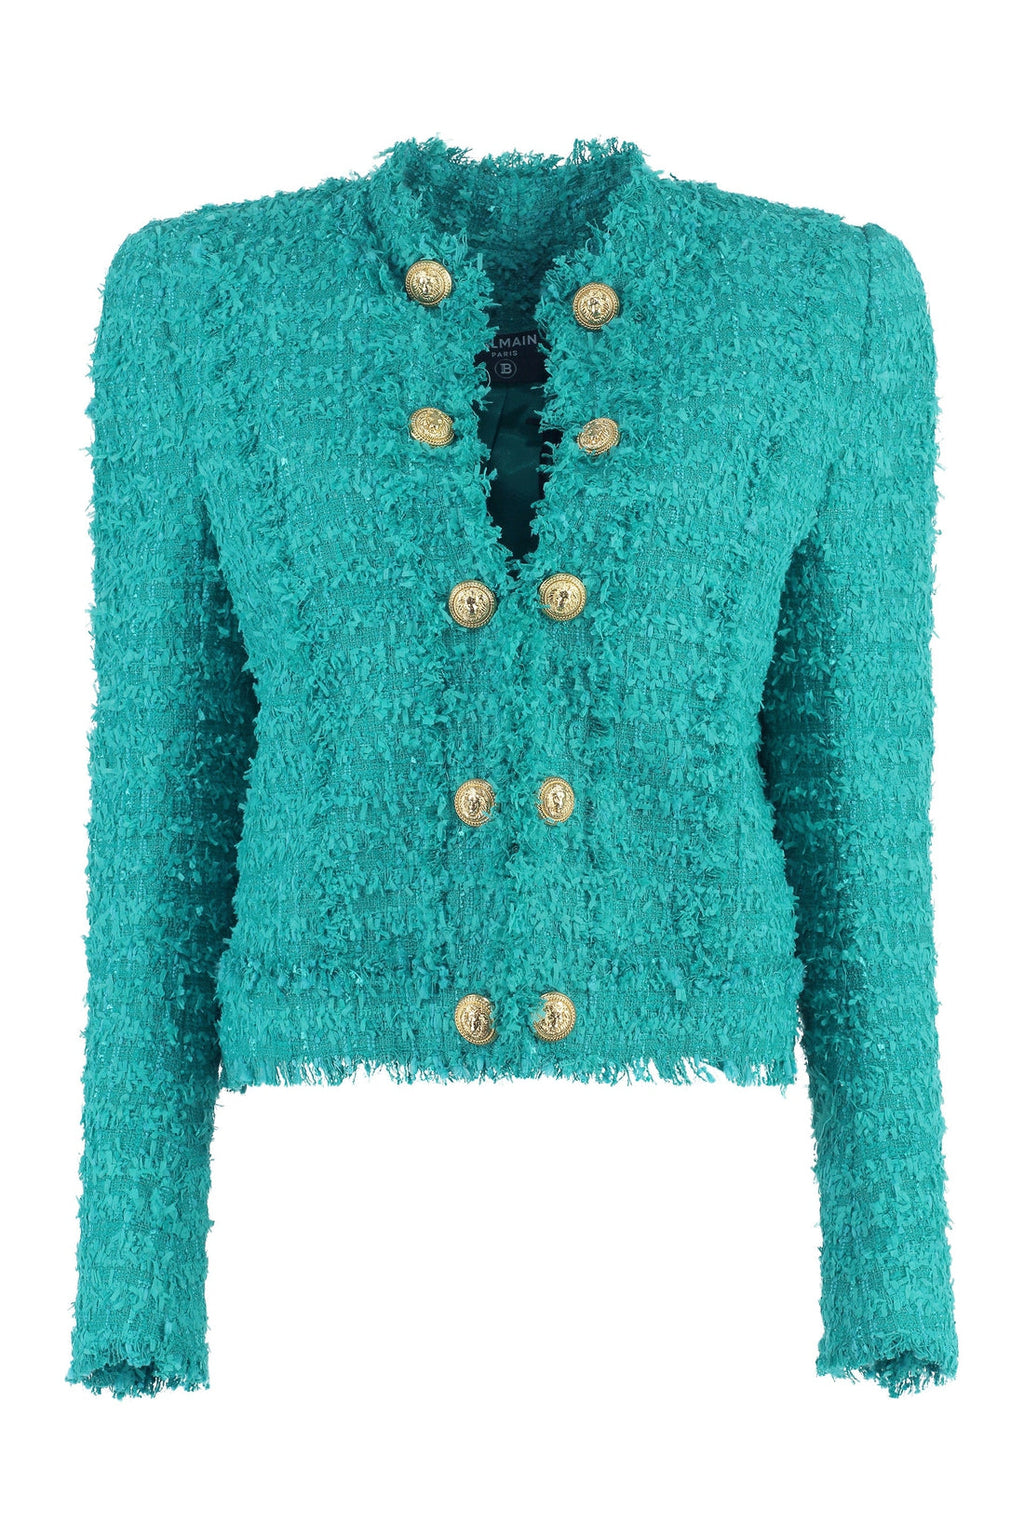 Balmain-OUTLET-SALE-Tweed jacket-ARCHIVIST